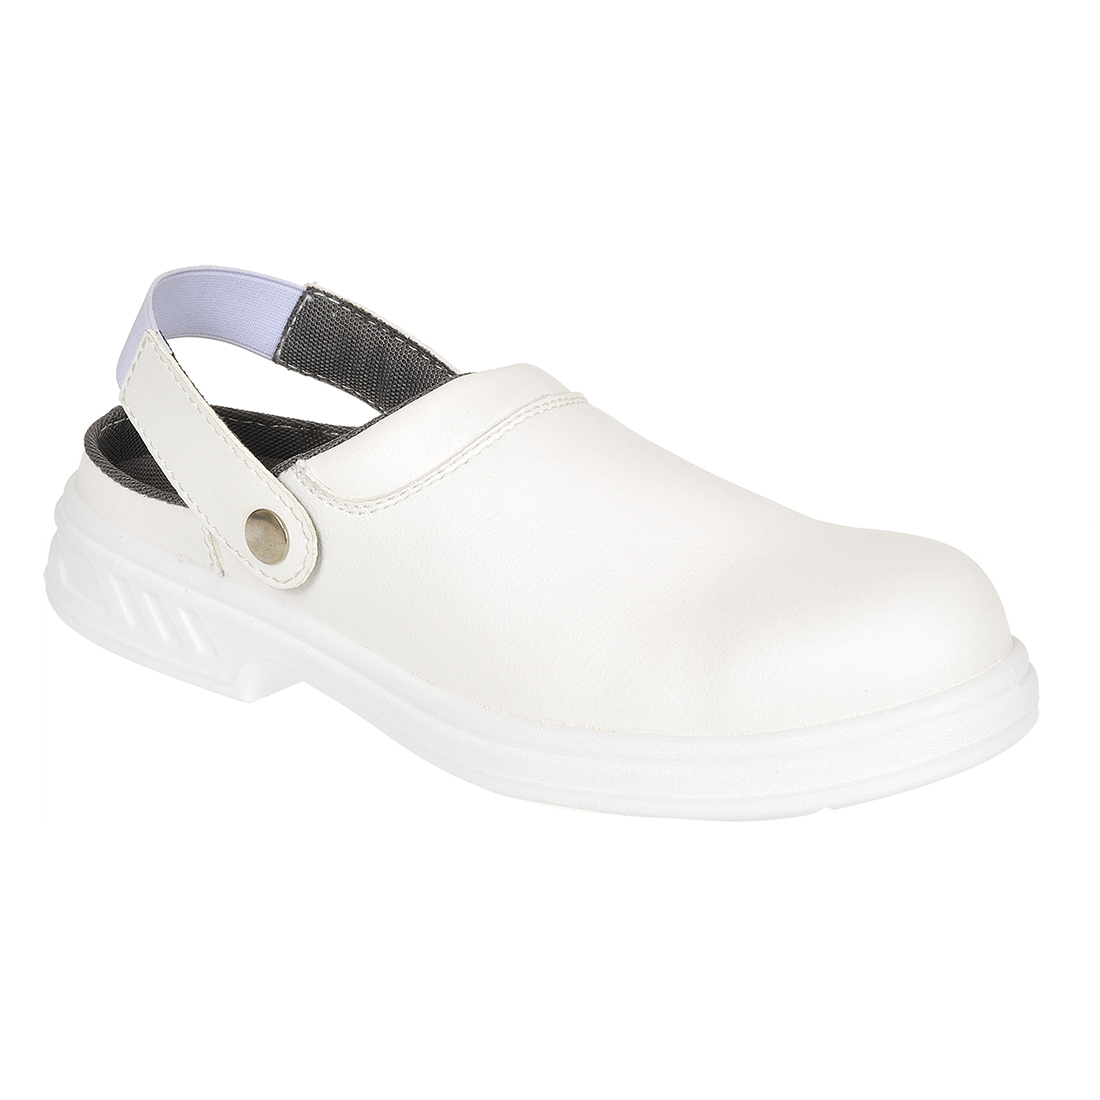 Pracovní sandál Steelite Safety Clog SB AE WRU Barva: bílá, Velikost: 34